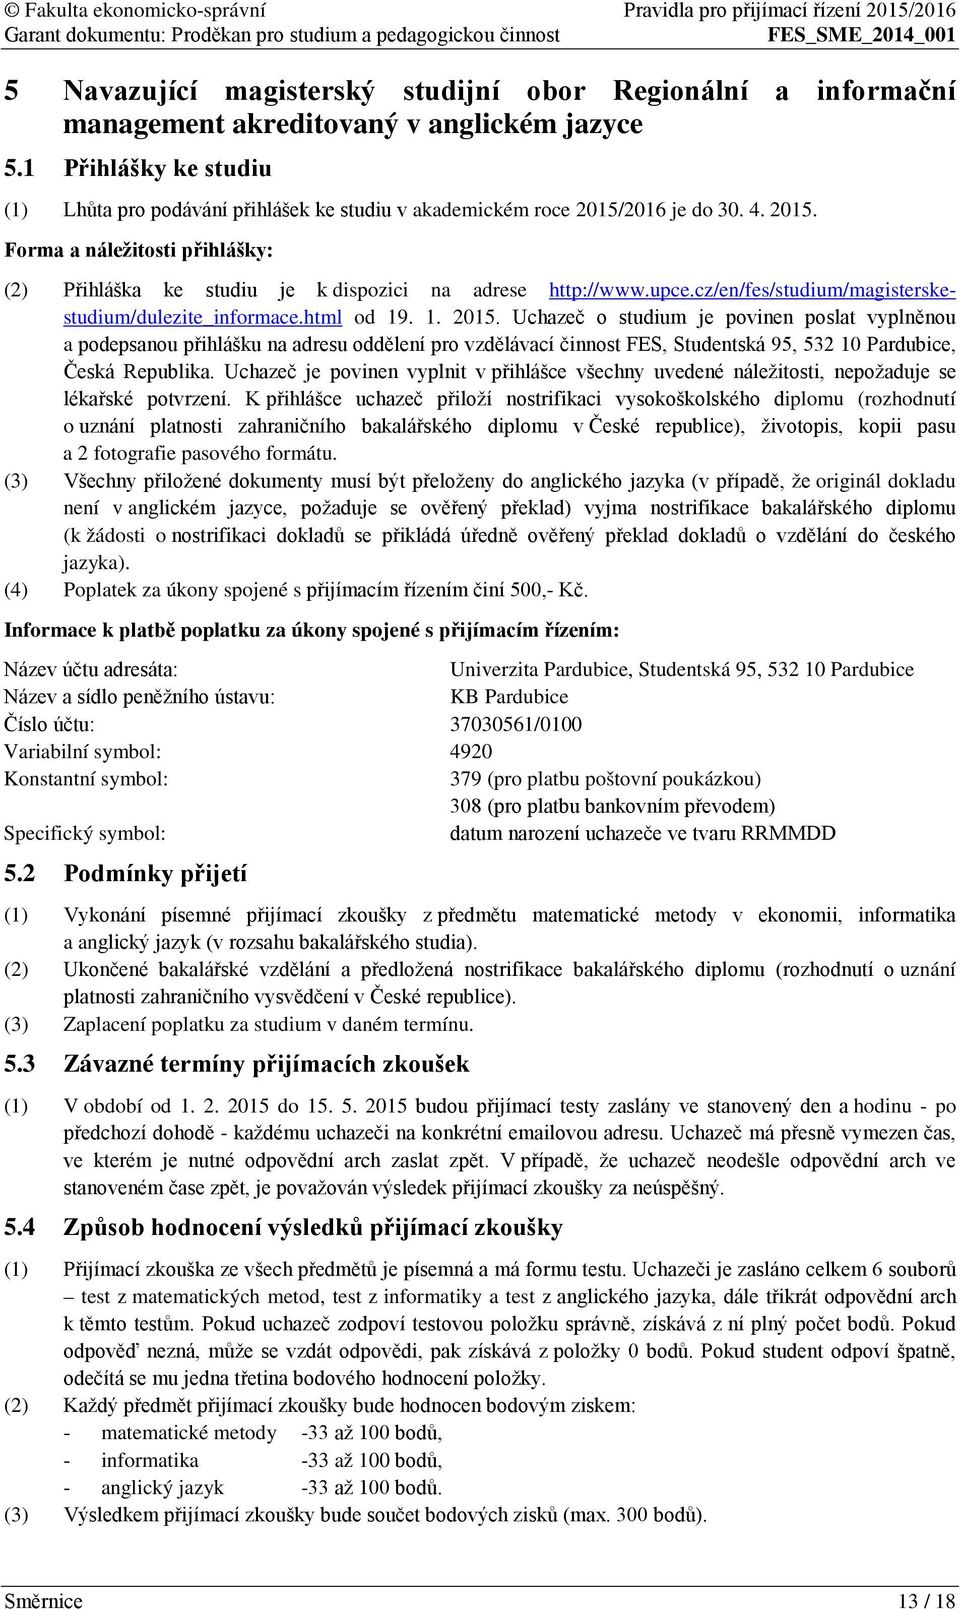 upce.cz/en/fes/studium/magisterskestudium/dulezite_informace.html od 19. 1. 2015.